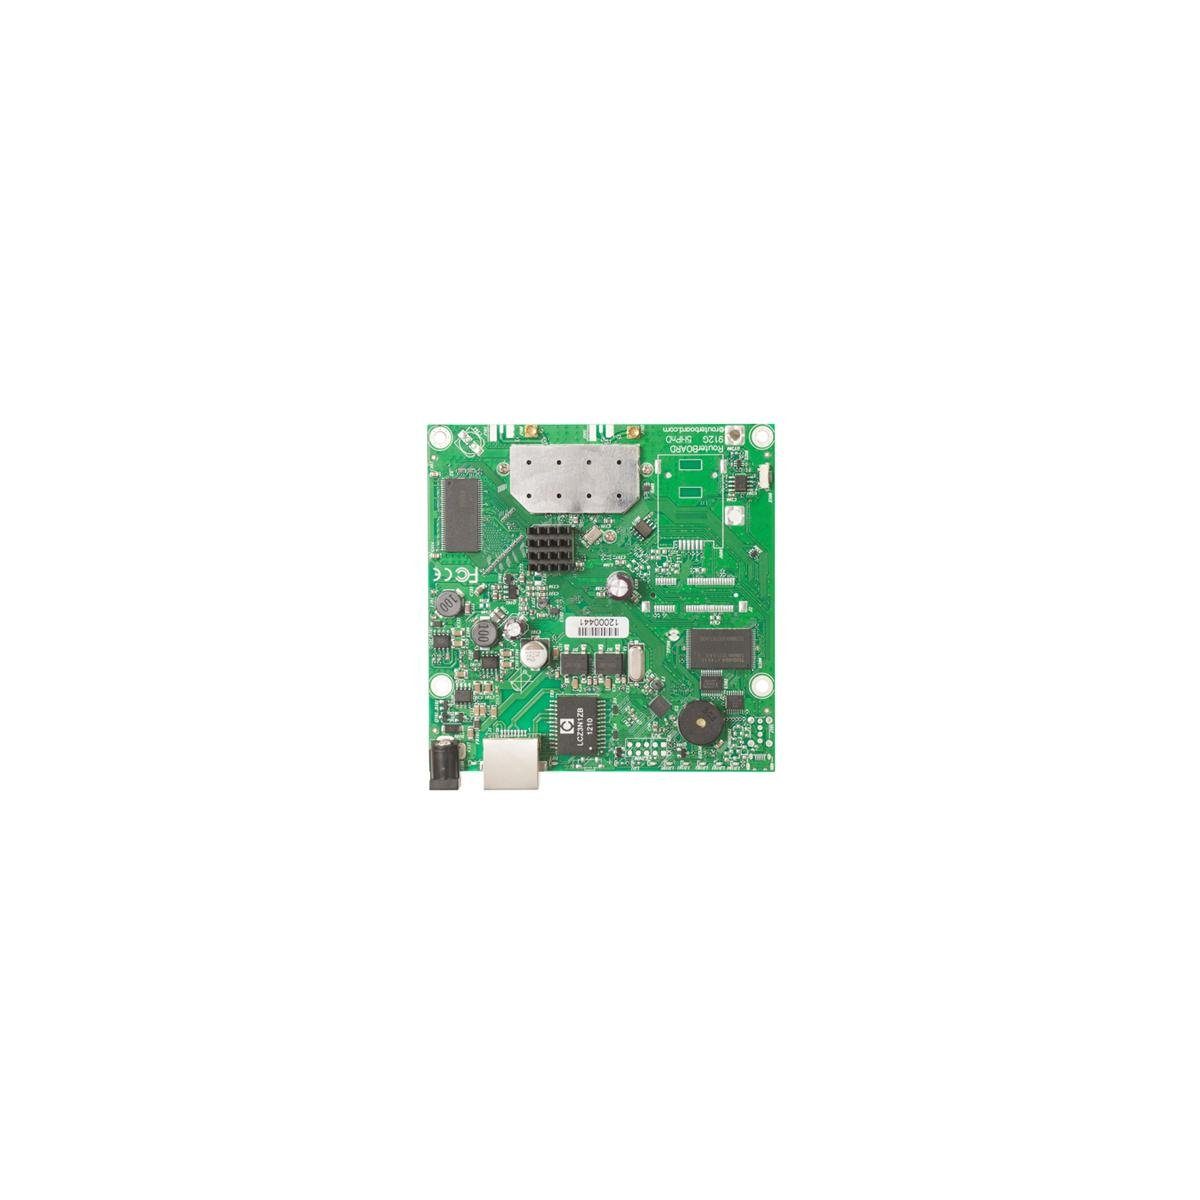 MikroTik RB911G-2HPND - RouterBOARD, Gigabit-Port Netzwerk-Switch